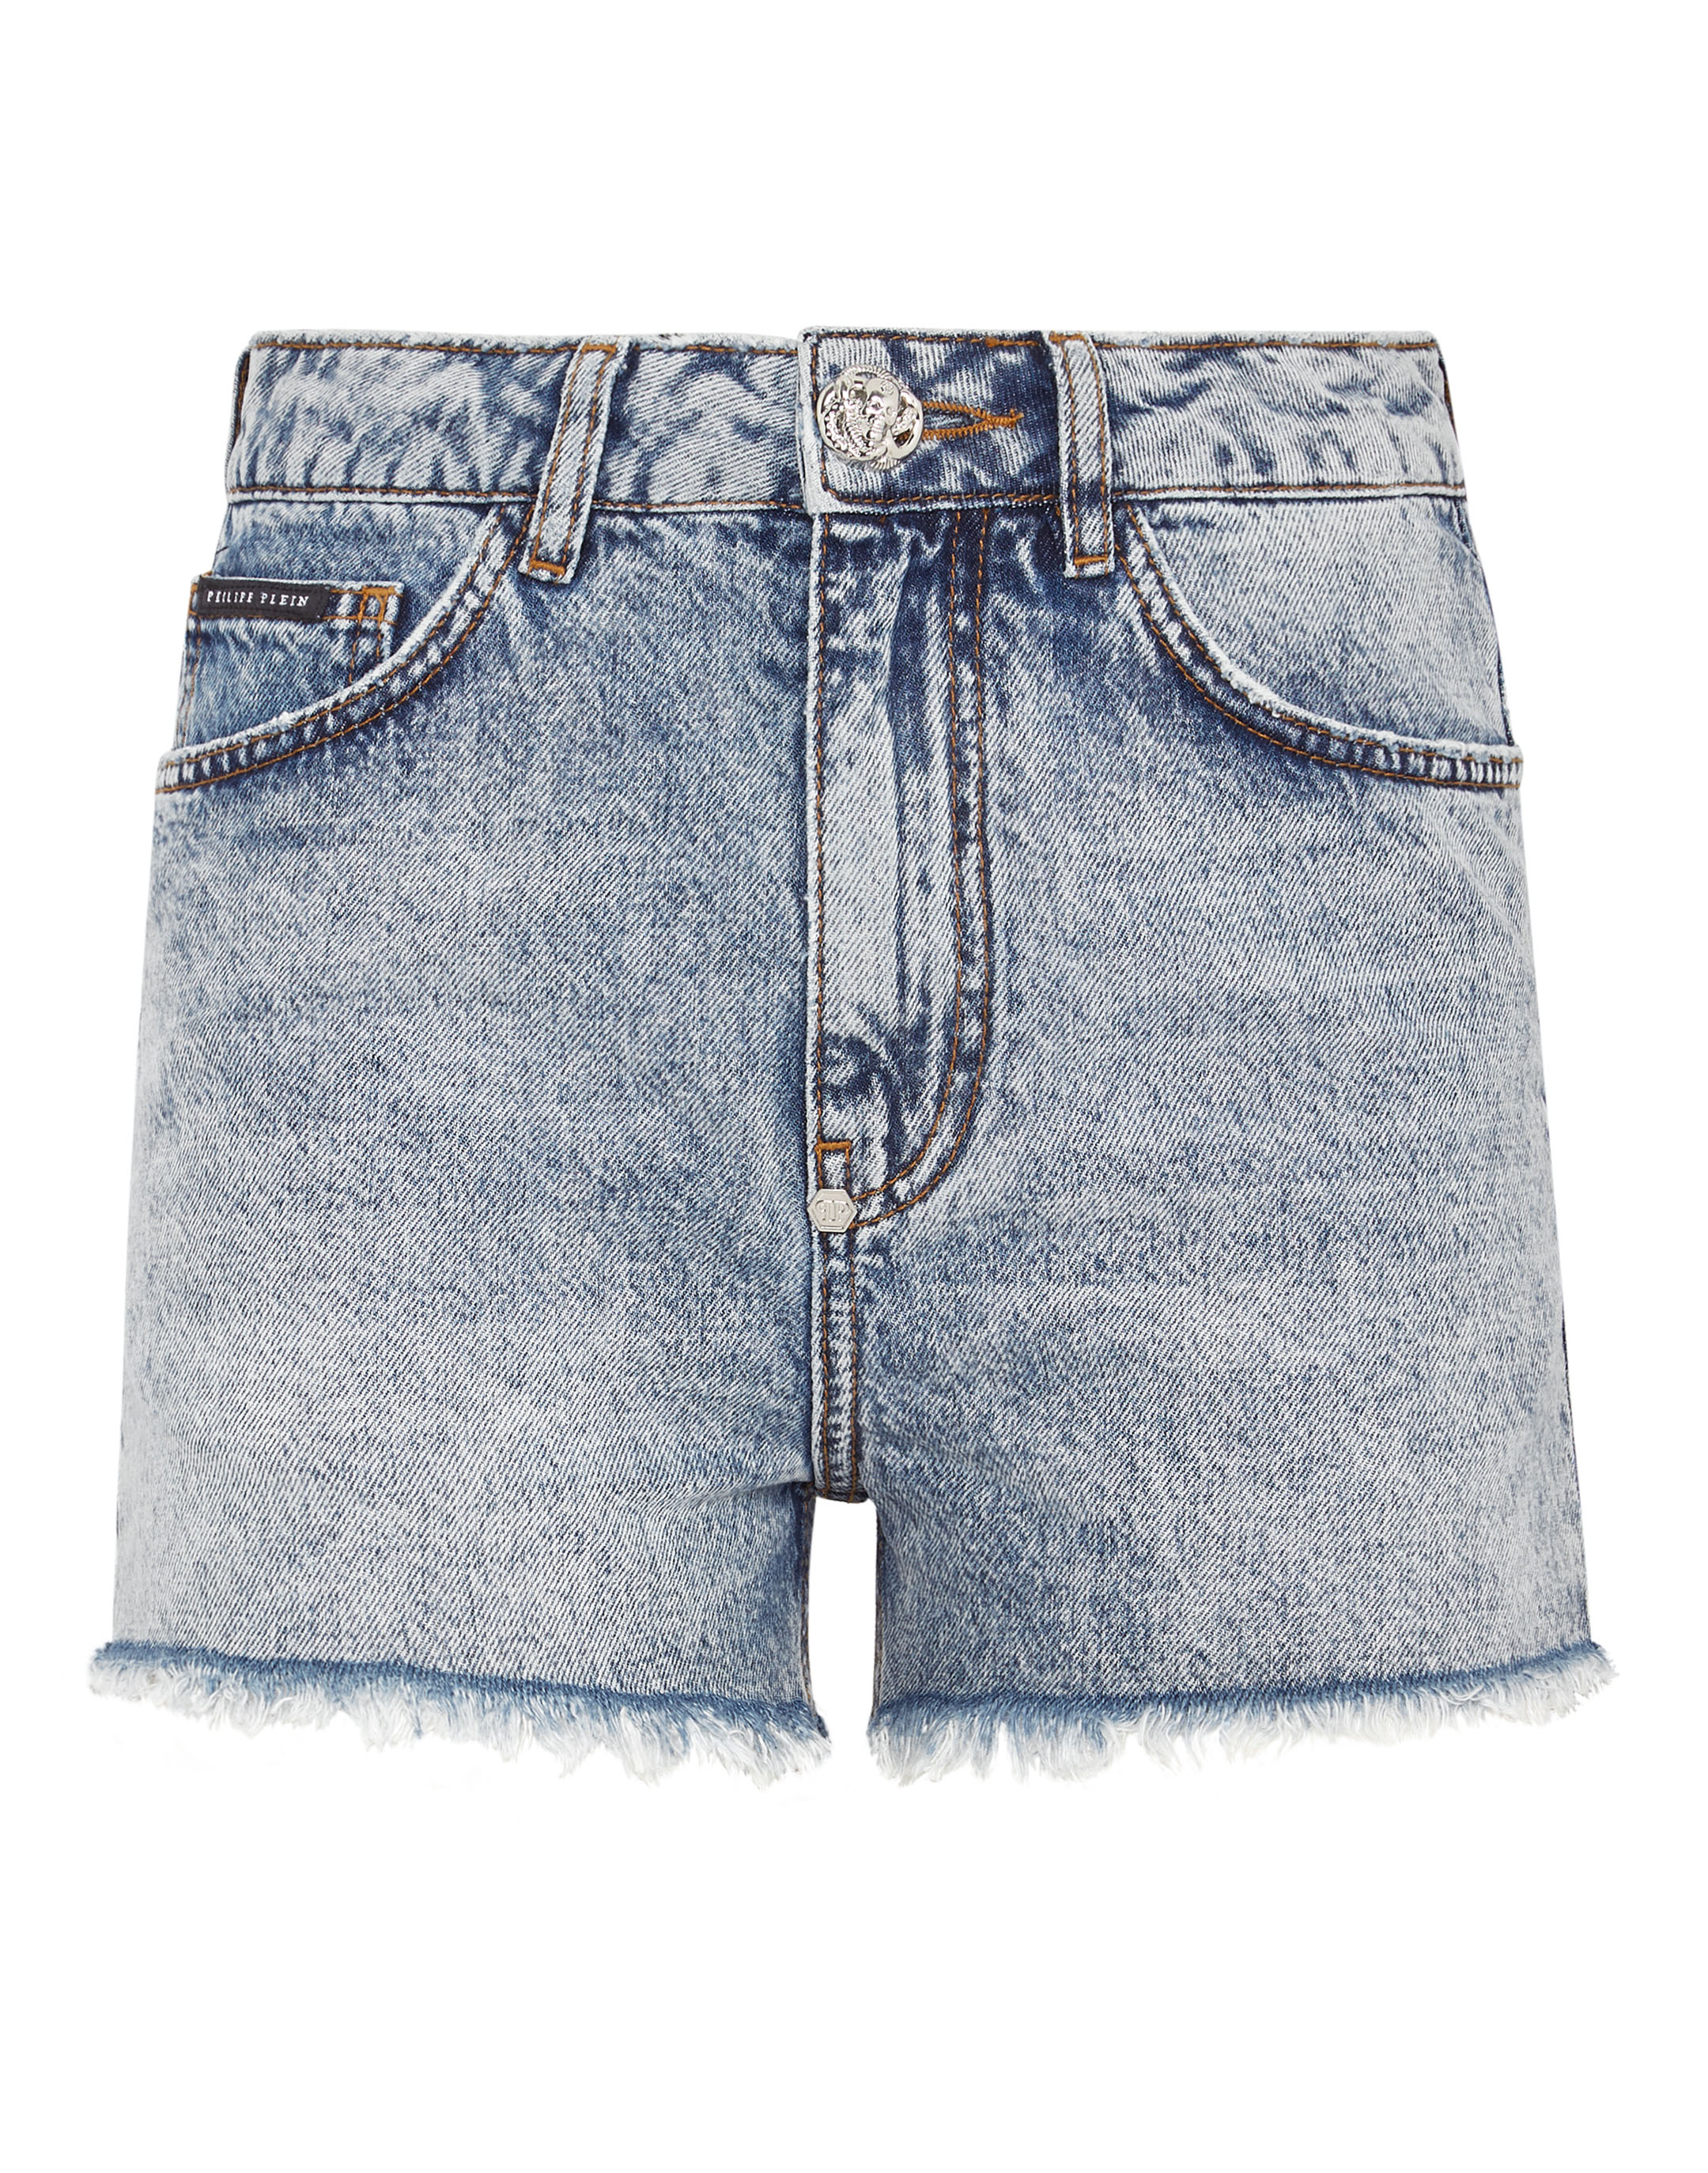 Buy SweatyRocks Women's High Waist Denim Shorts Straight Leg Solid Jean  Shorts, Summer Hot Pants with Pockets, Regular Fit, Light Wash, Medium at  Amazon.in